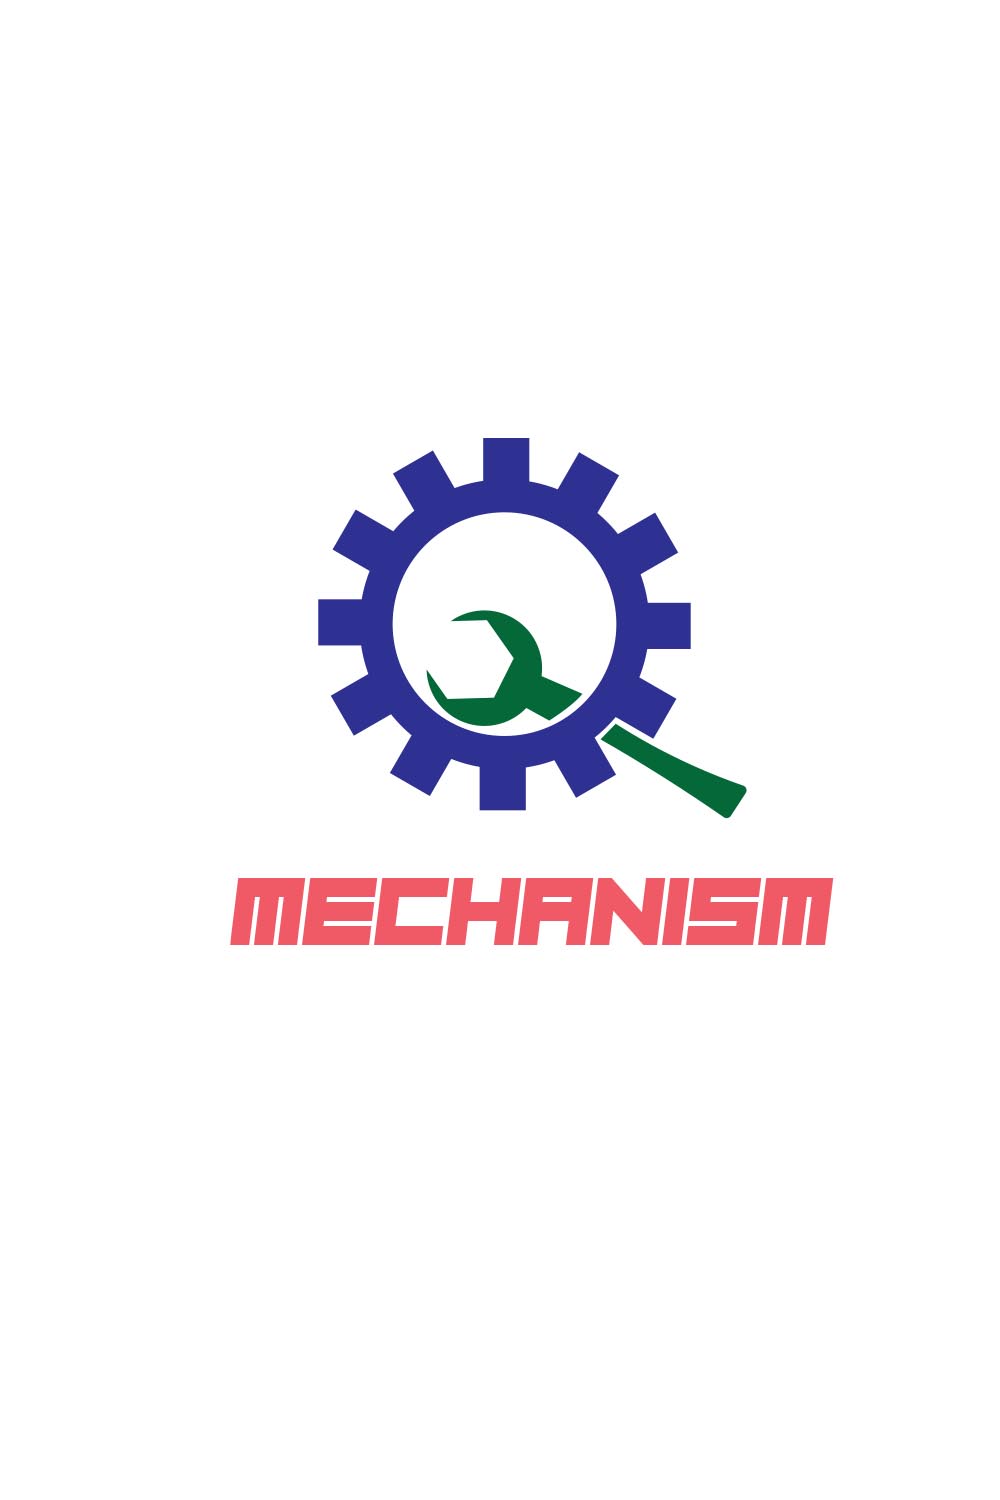 architechrure or mechanism vector logo pinterest 689